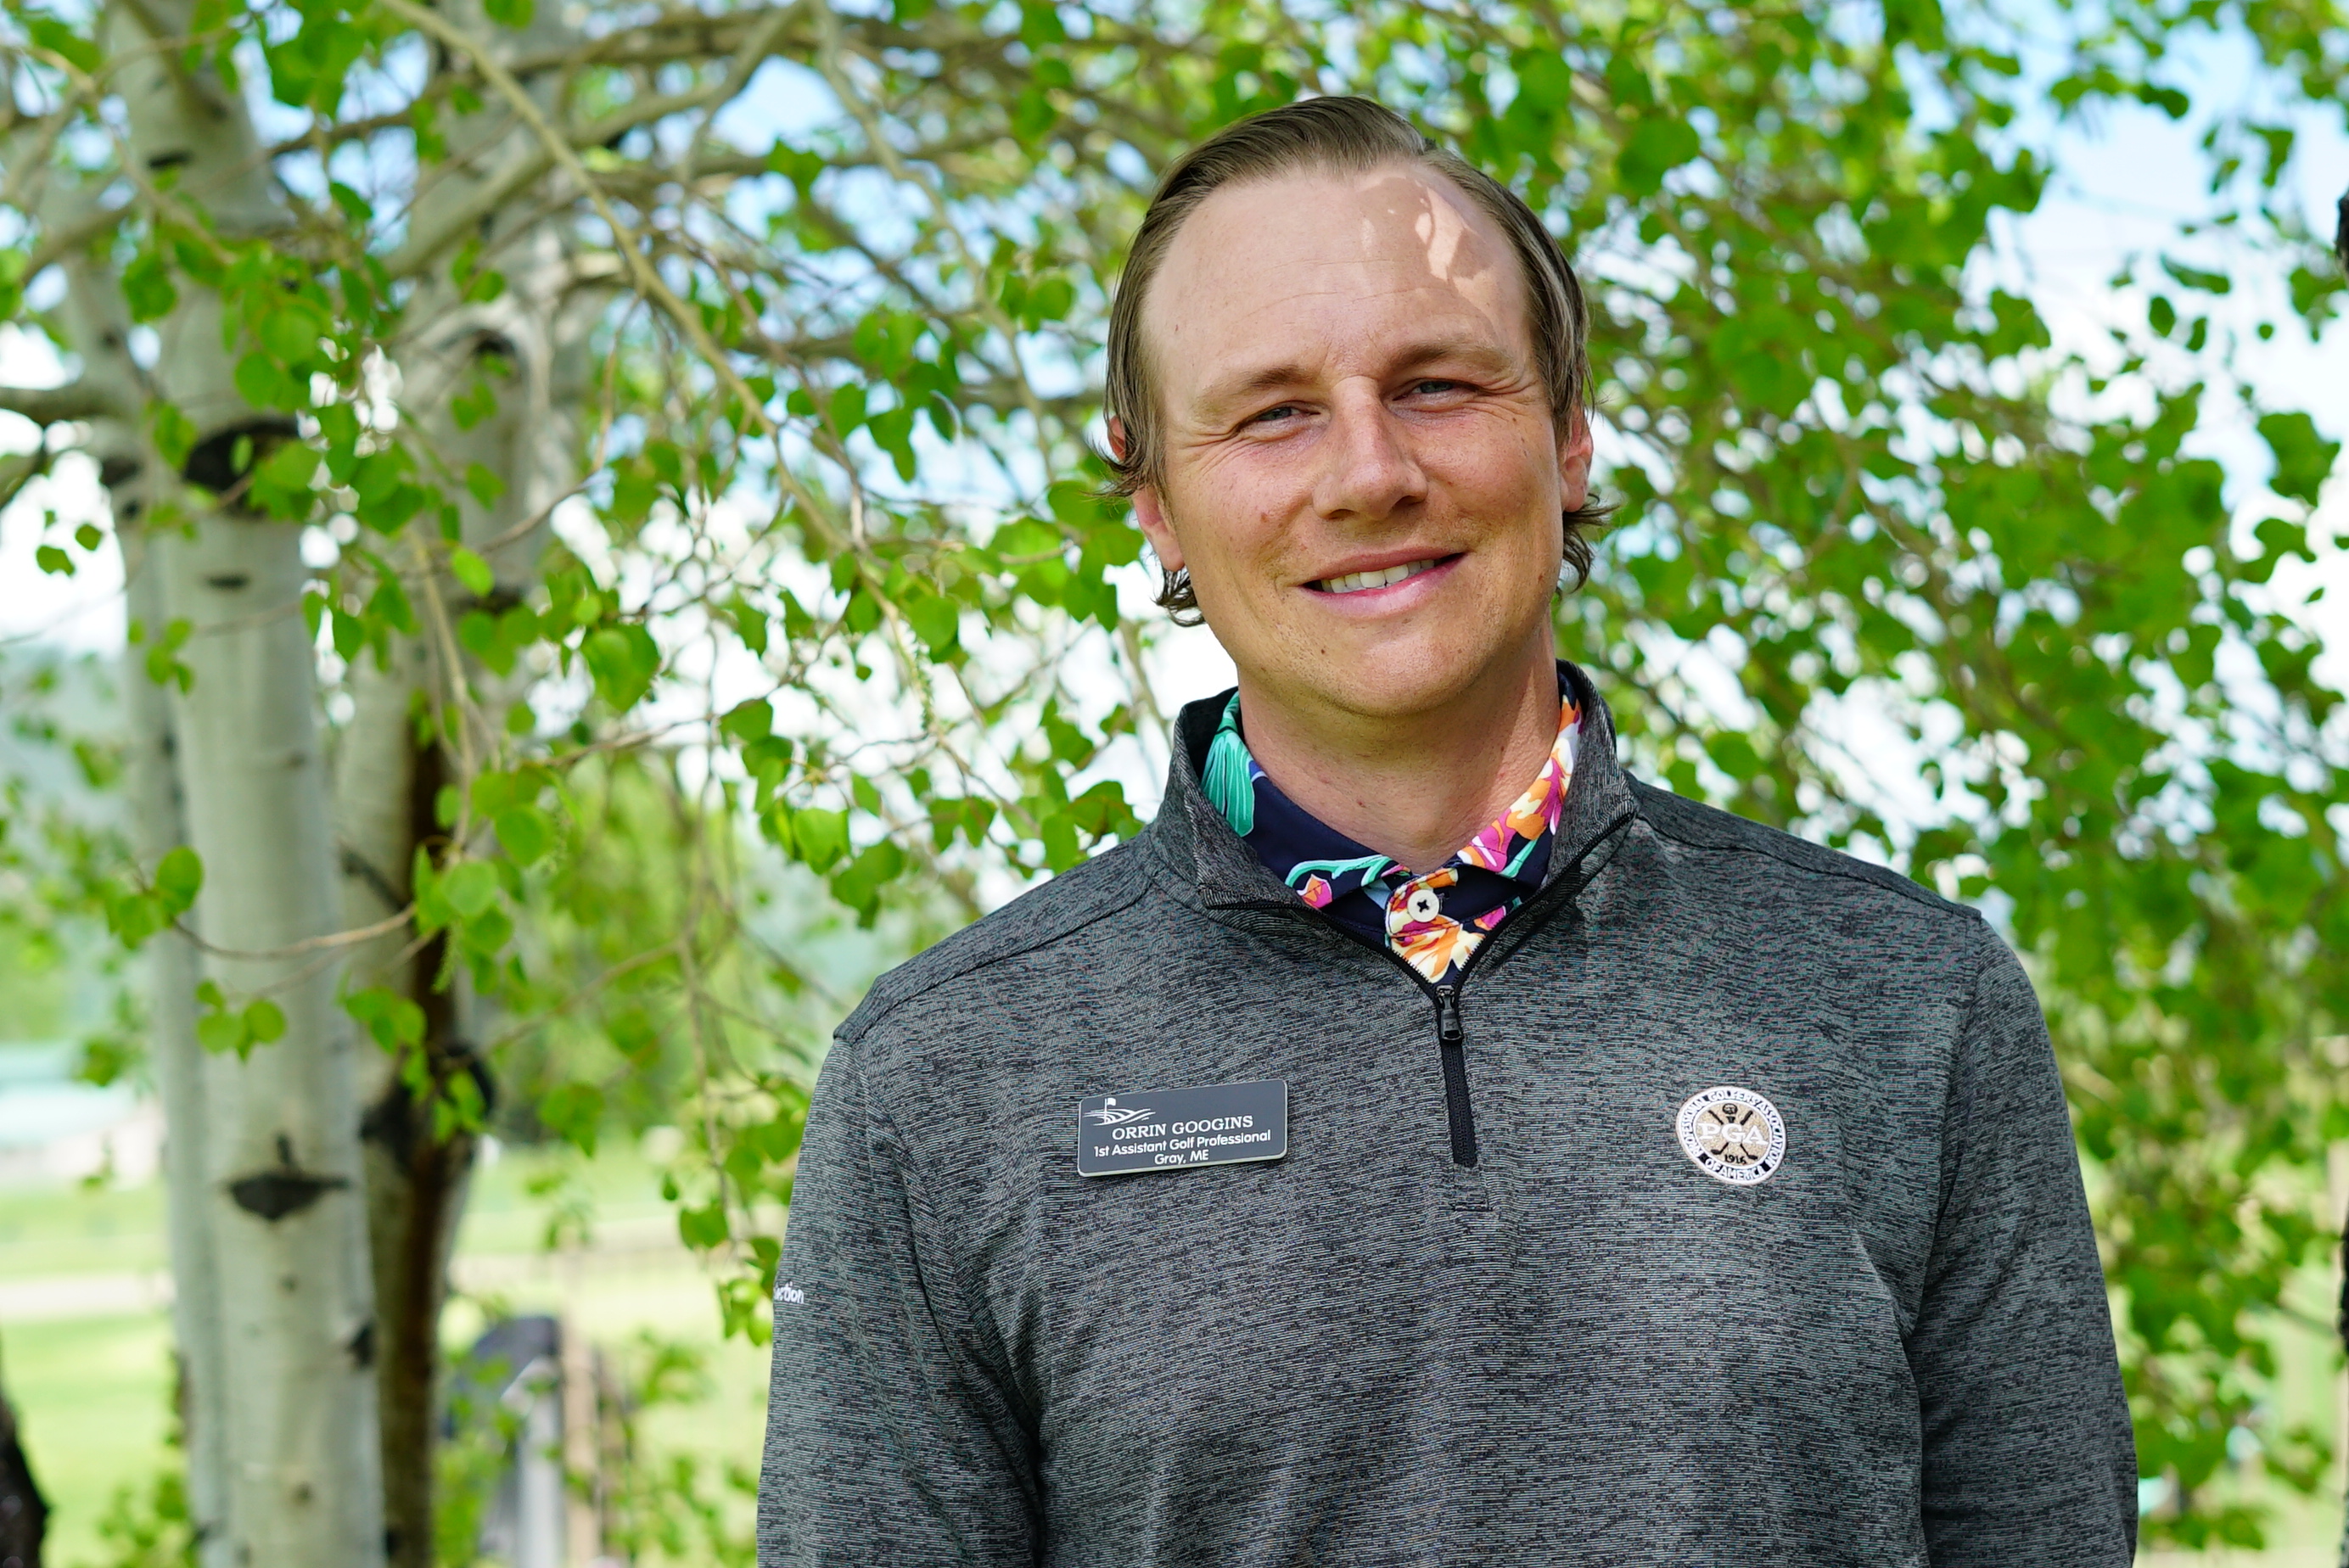 Orrin Googins, PGA 1st Assistant Golf Professional